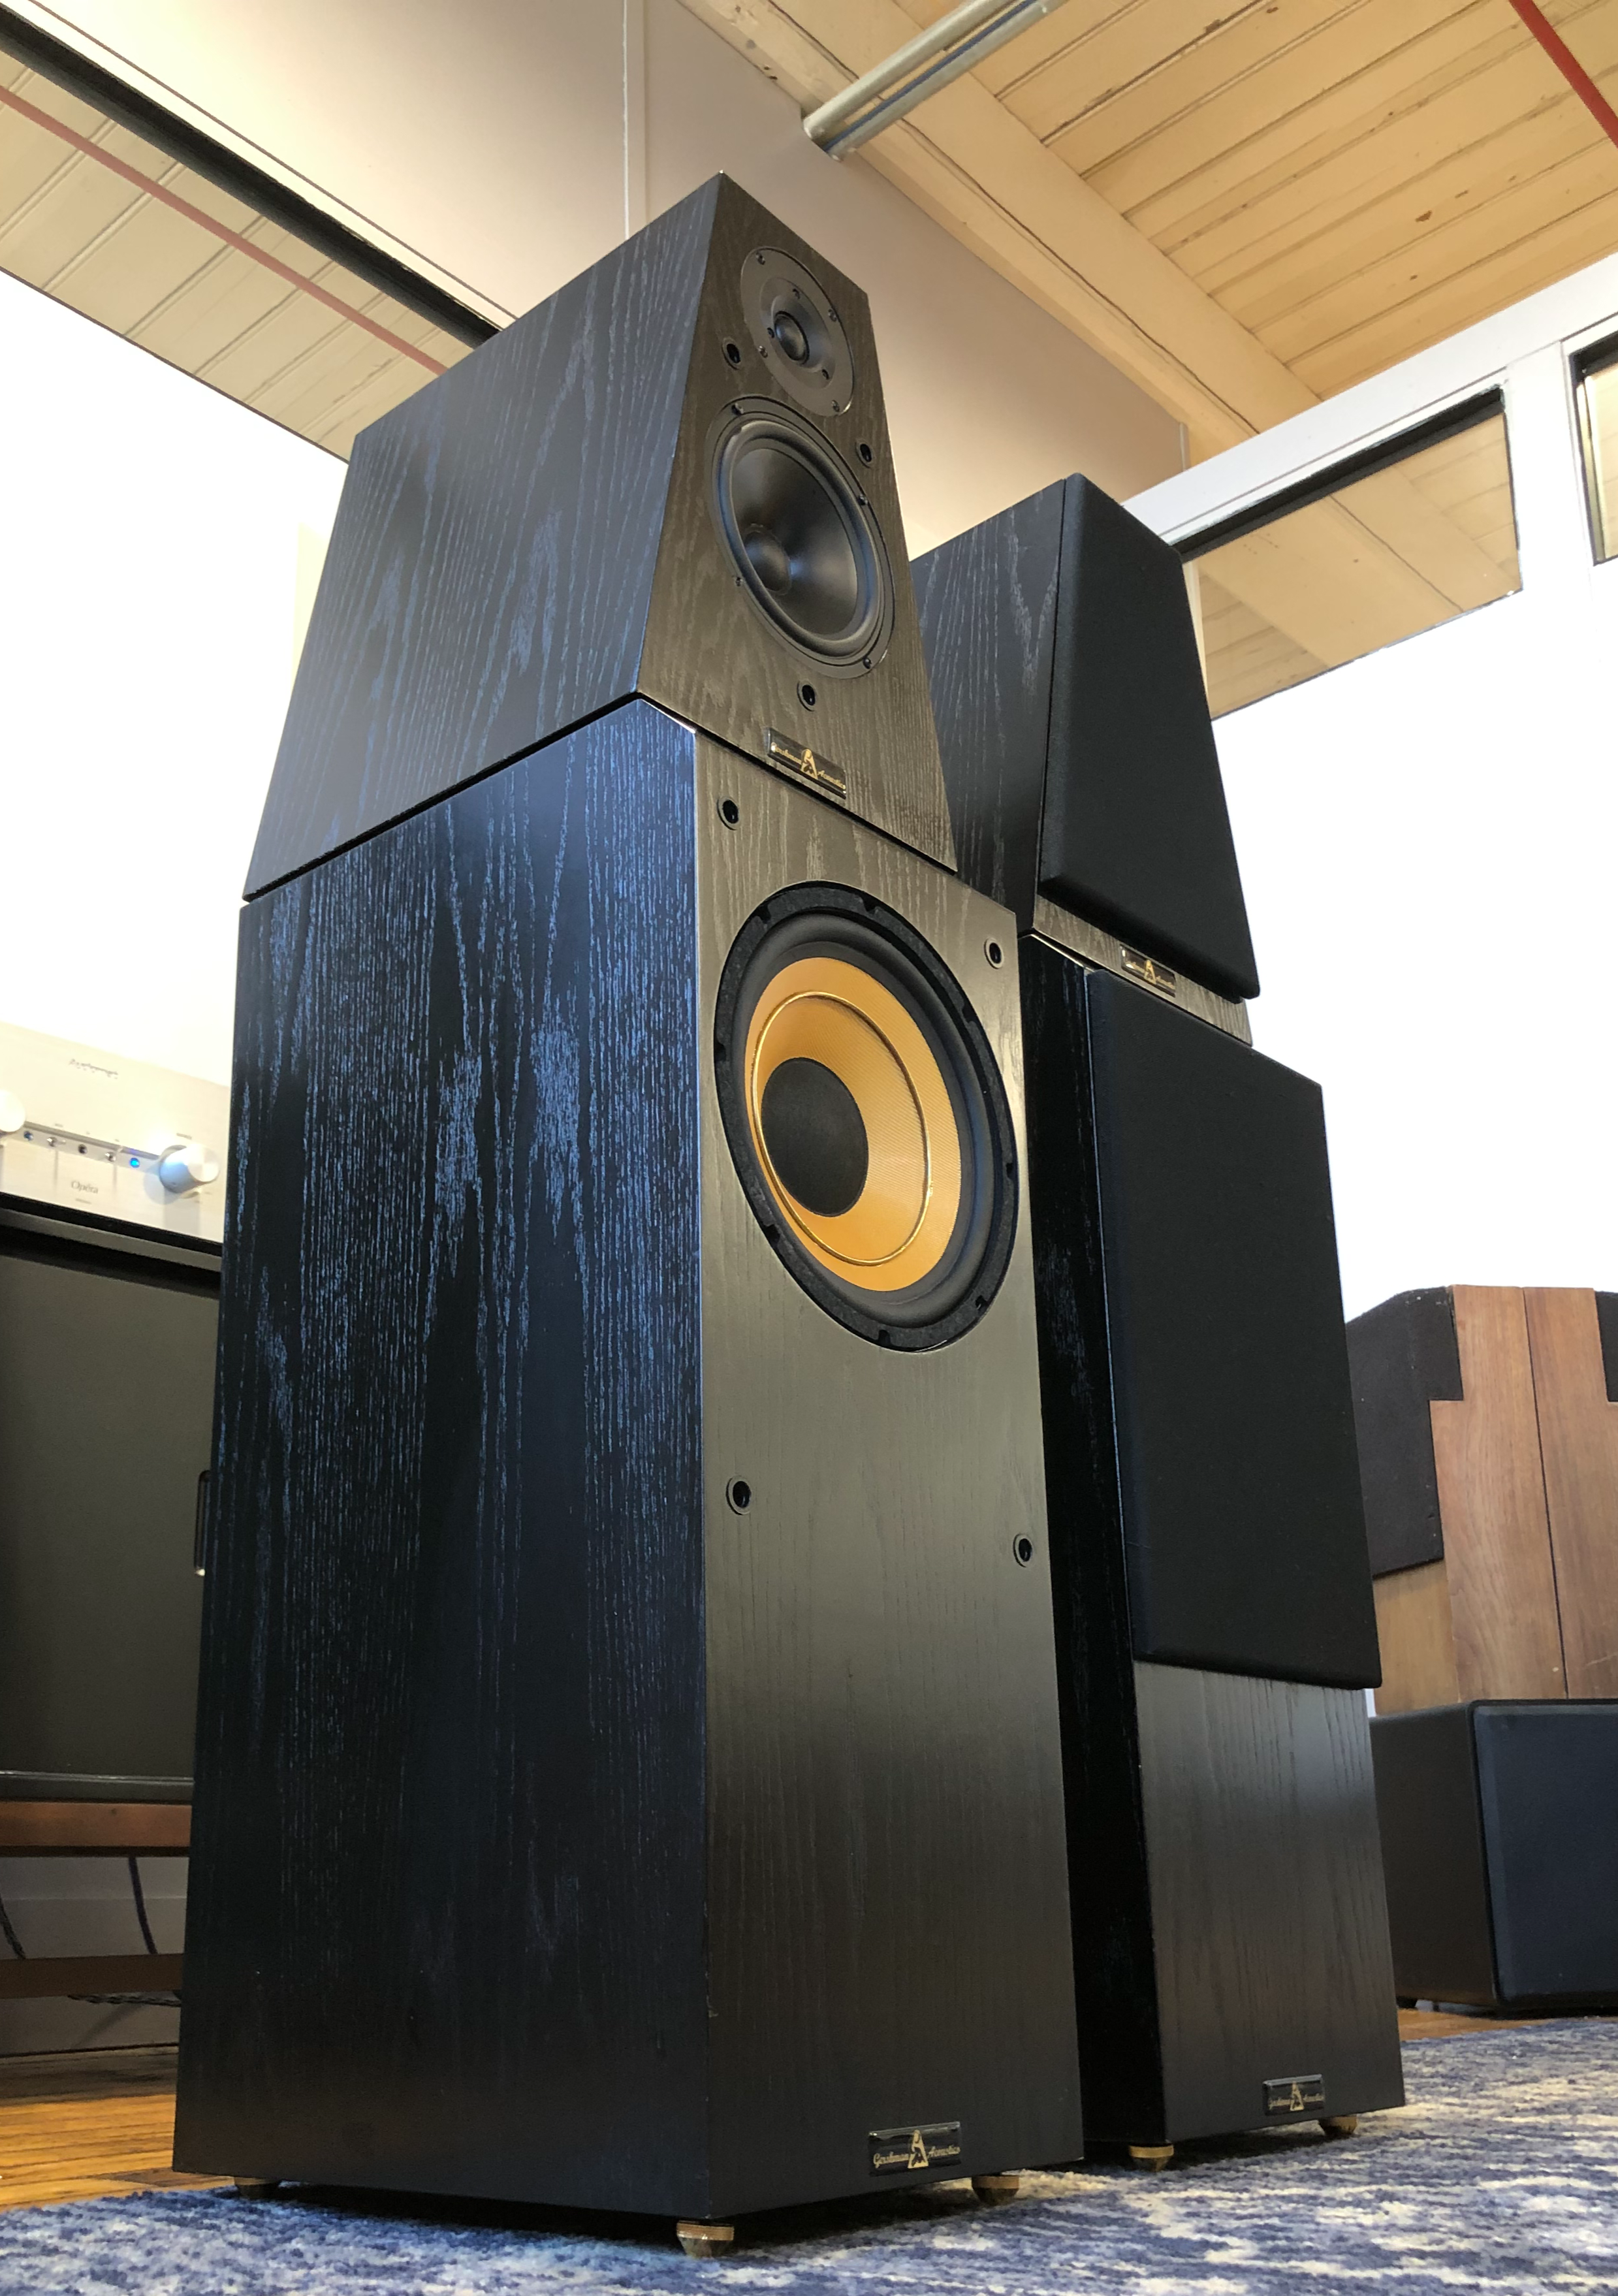 Gershman Acoustics X1/SW1 High Performance Loudspeakers - SOLD